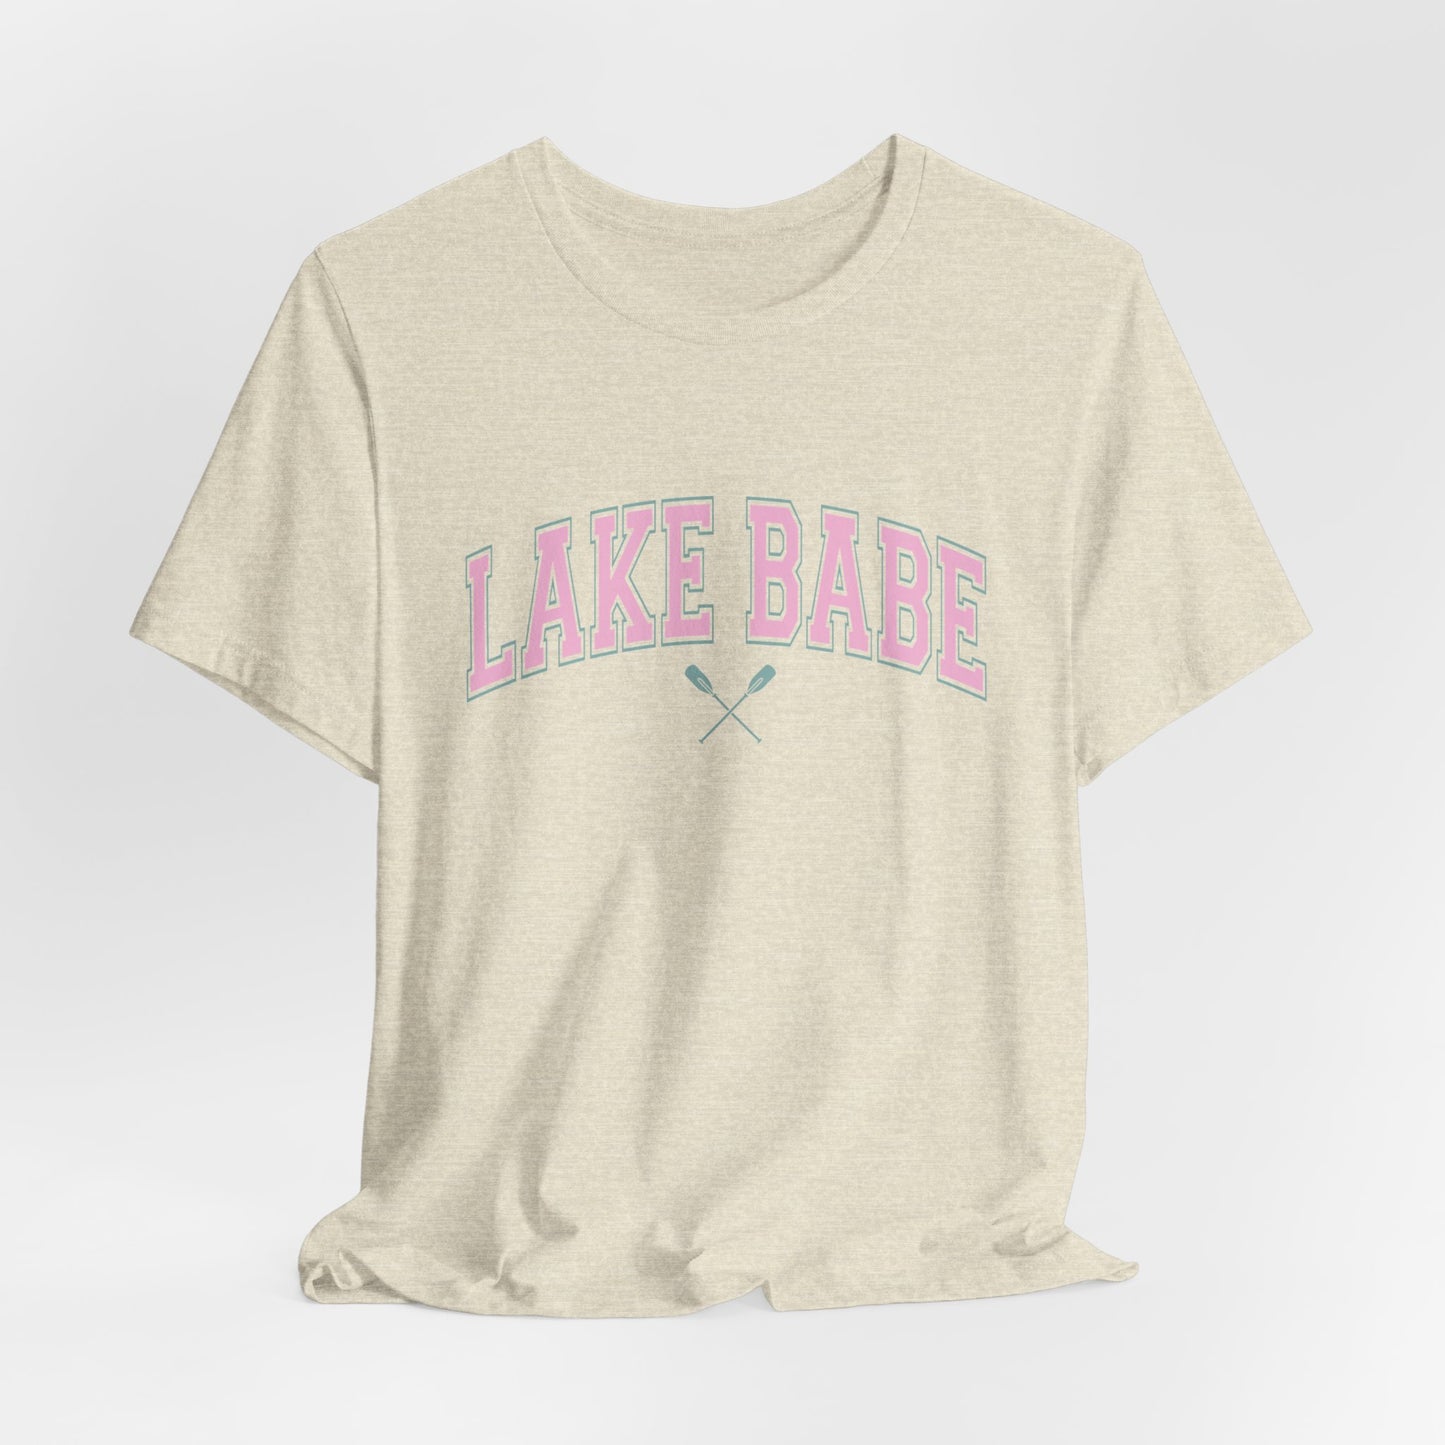 Lake Babe Women's Short Sleeve Tee